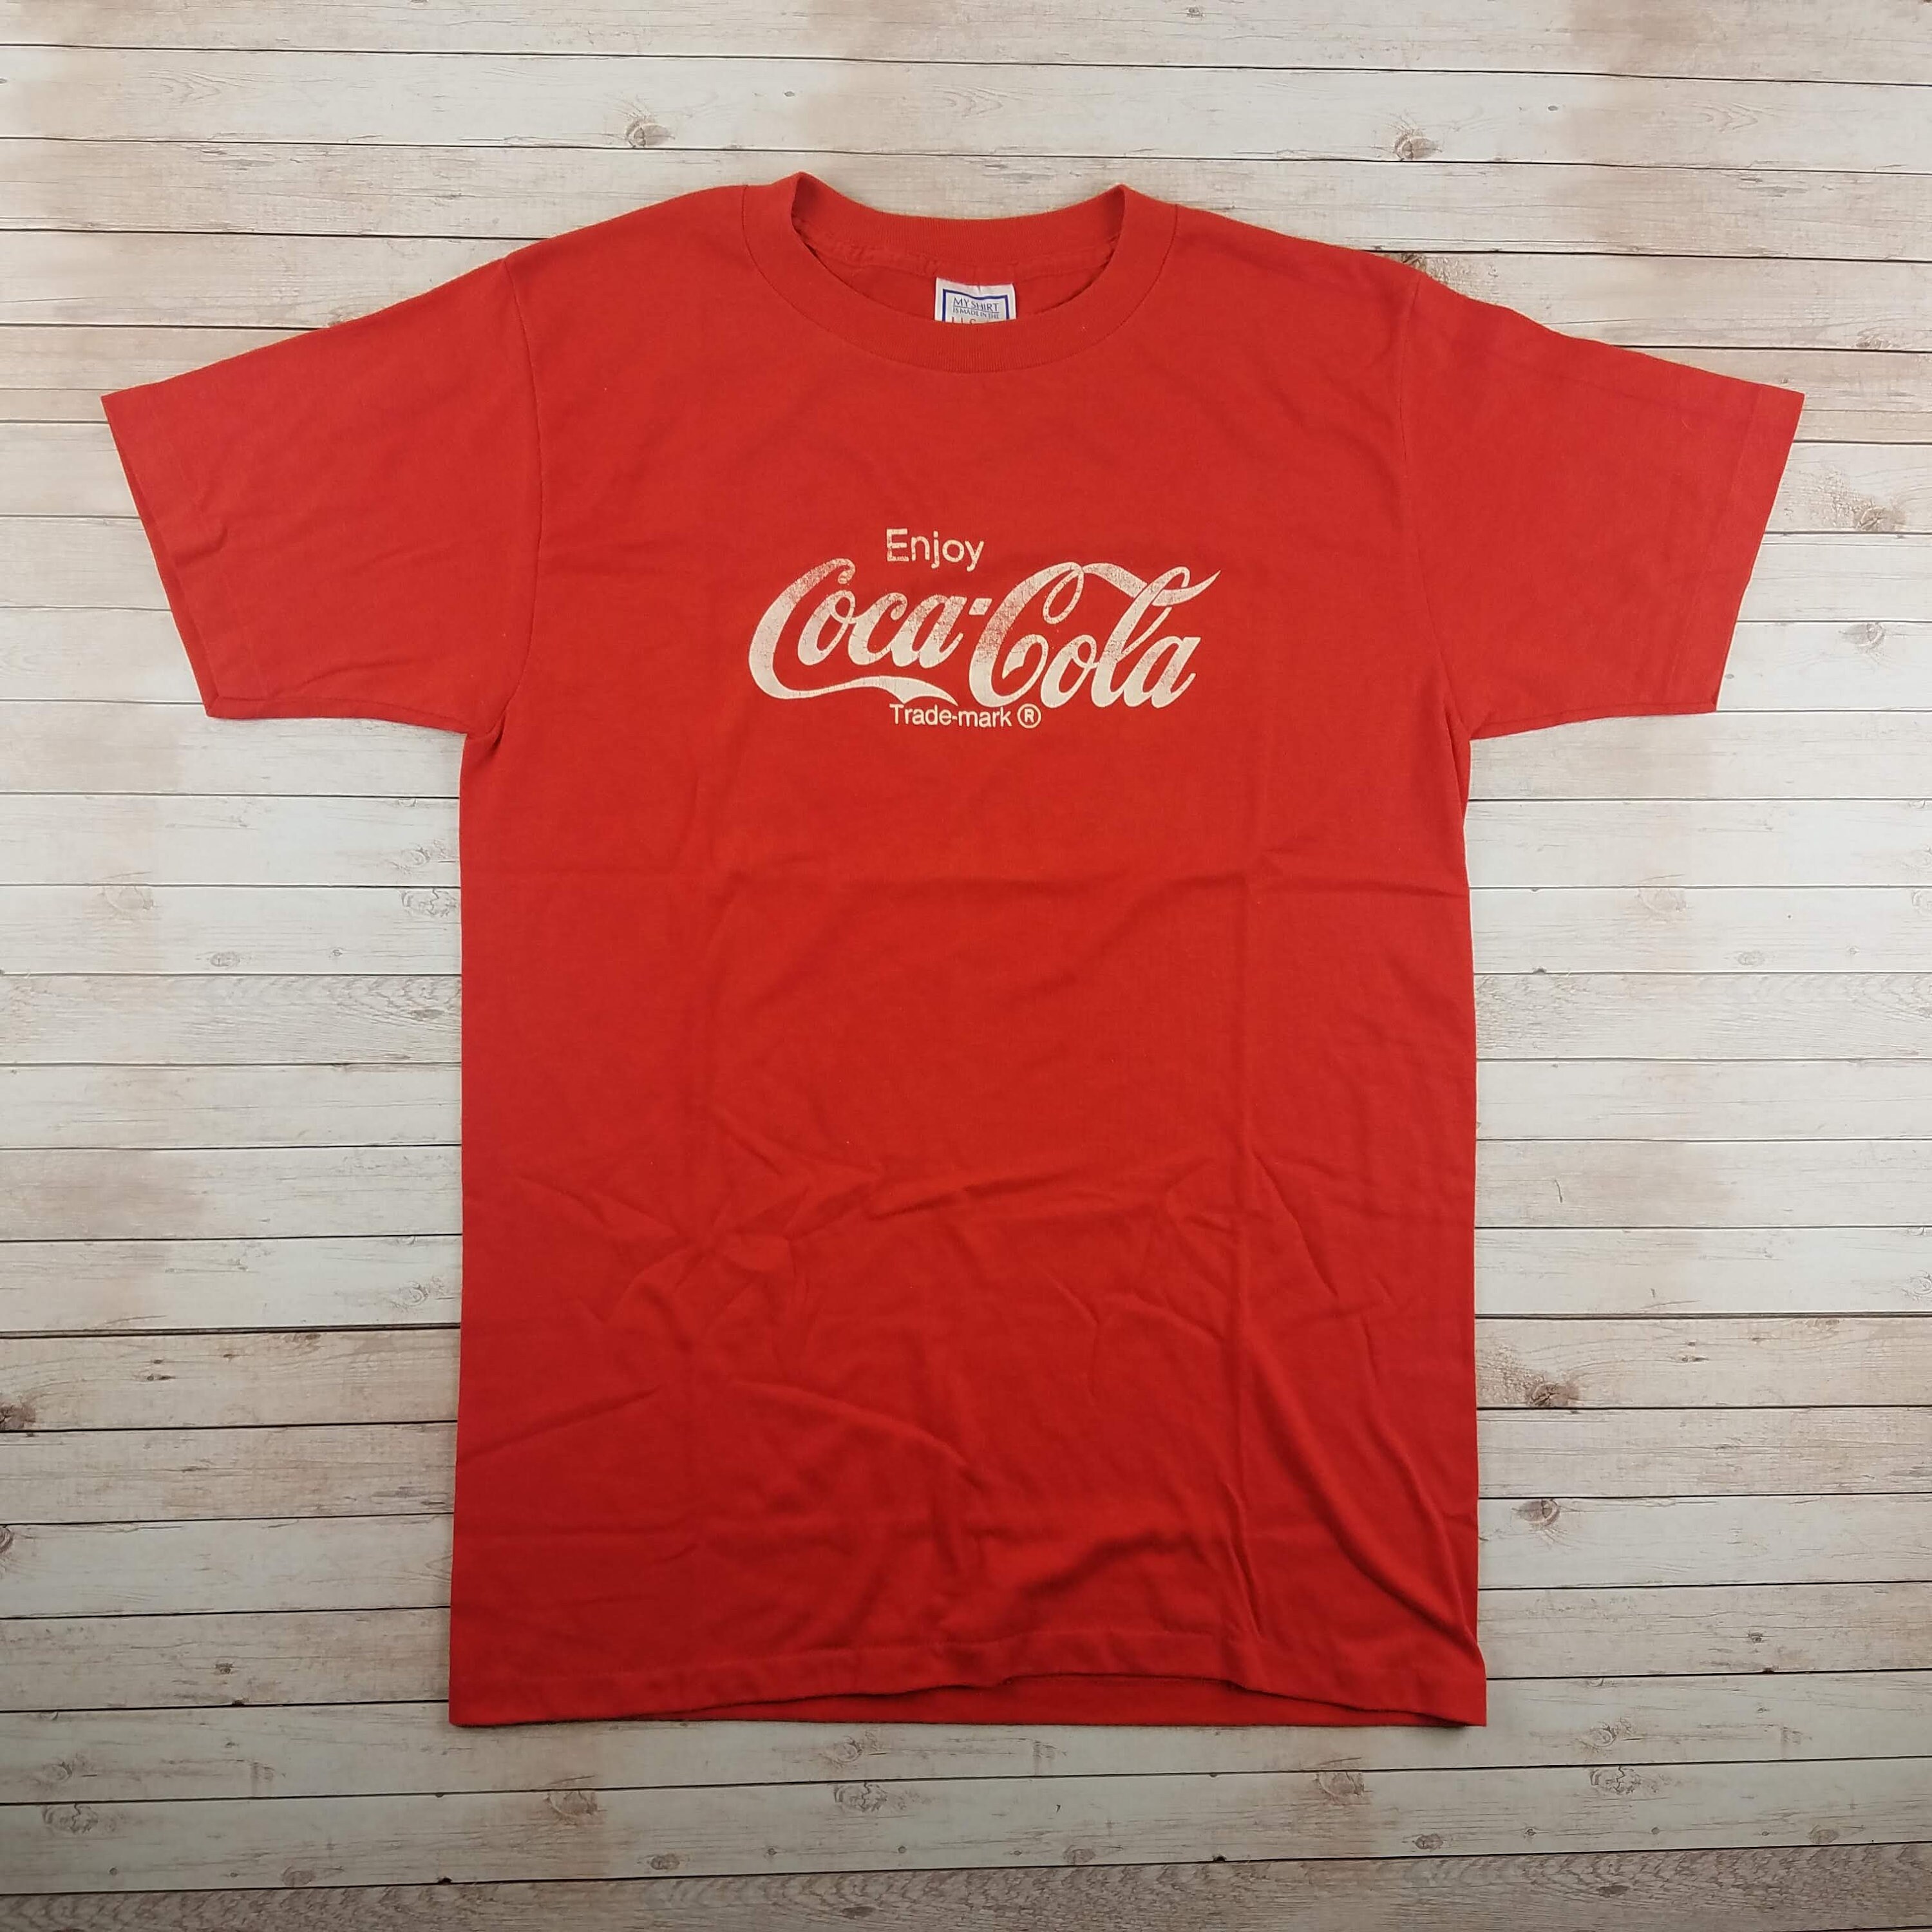 Vintage 1980s / 1990s Enjoy Coca-Cola Trademark Coke My Shirt | Etsy